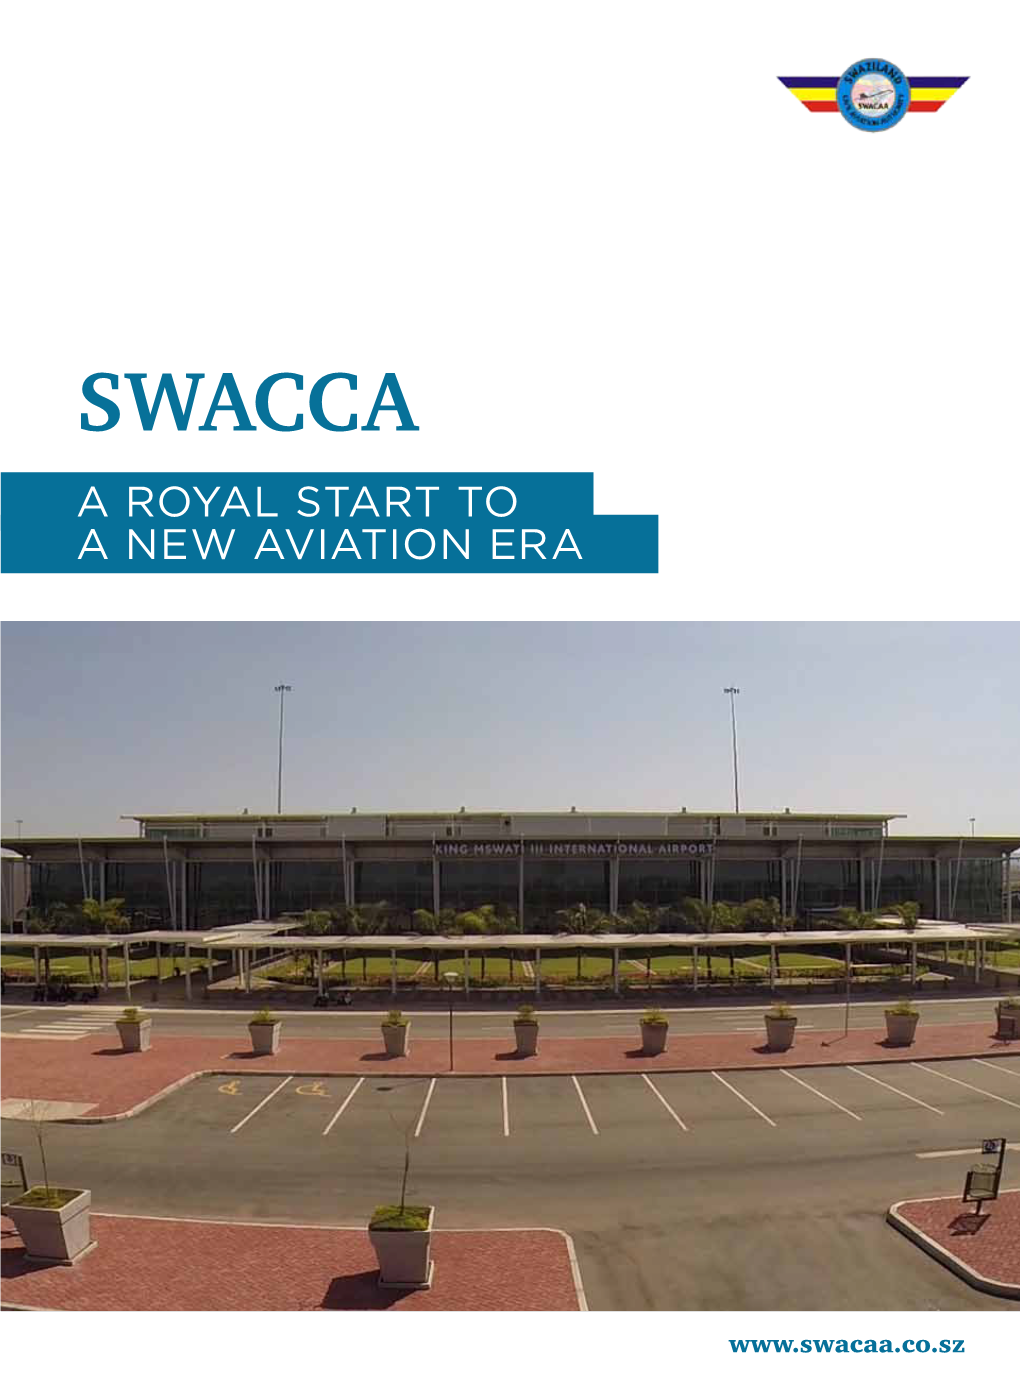 SWACCA a Royal Start to a New Aviation Era